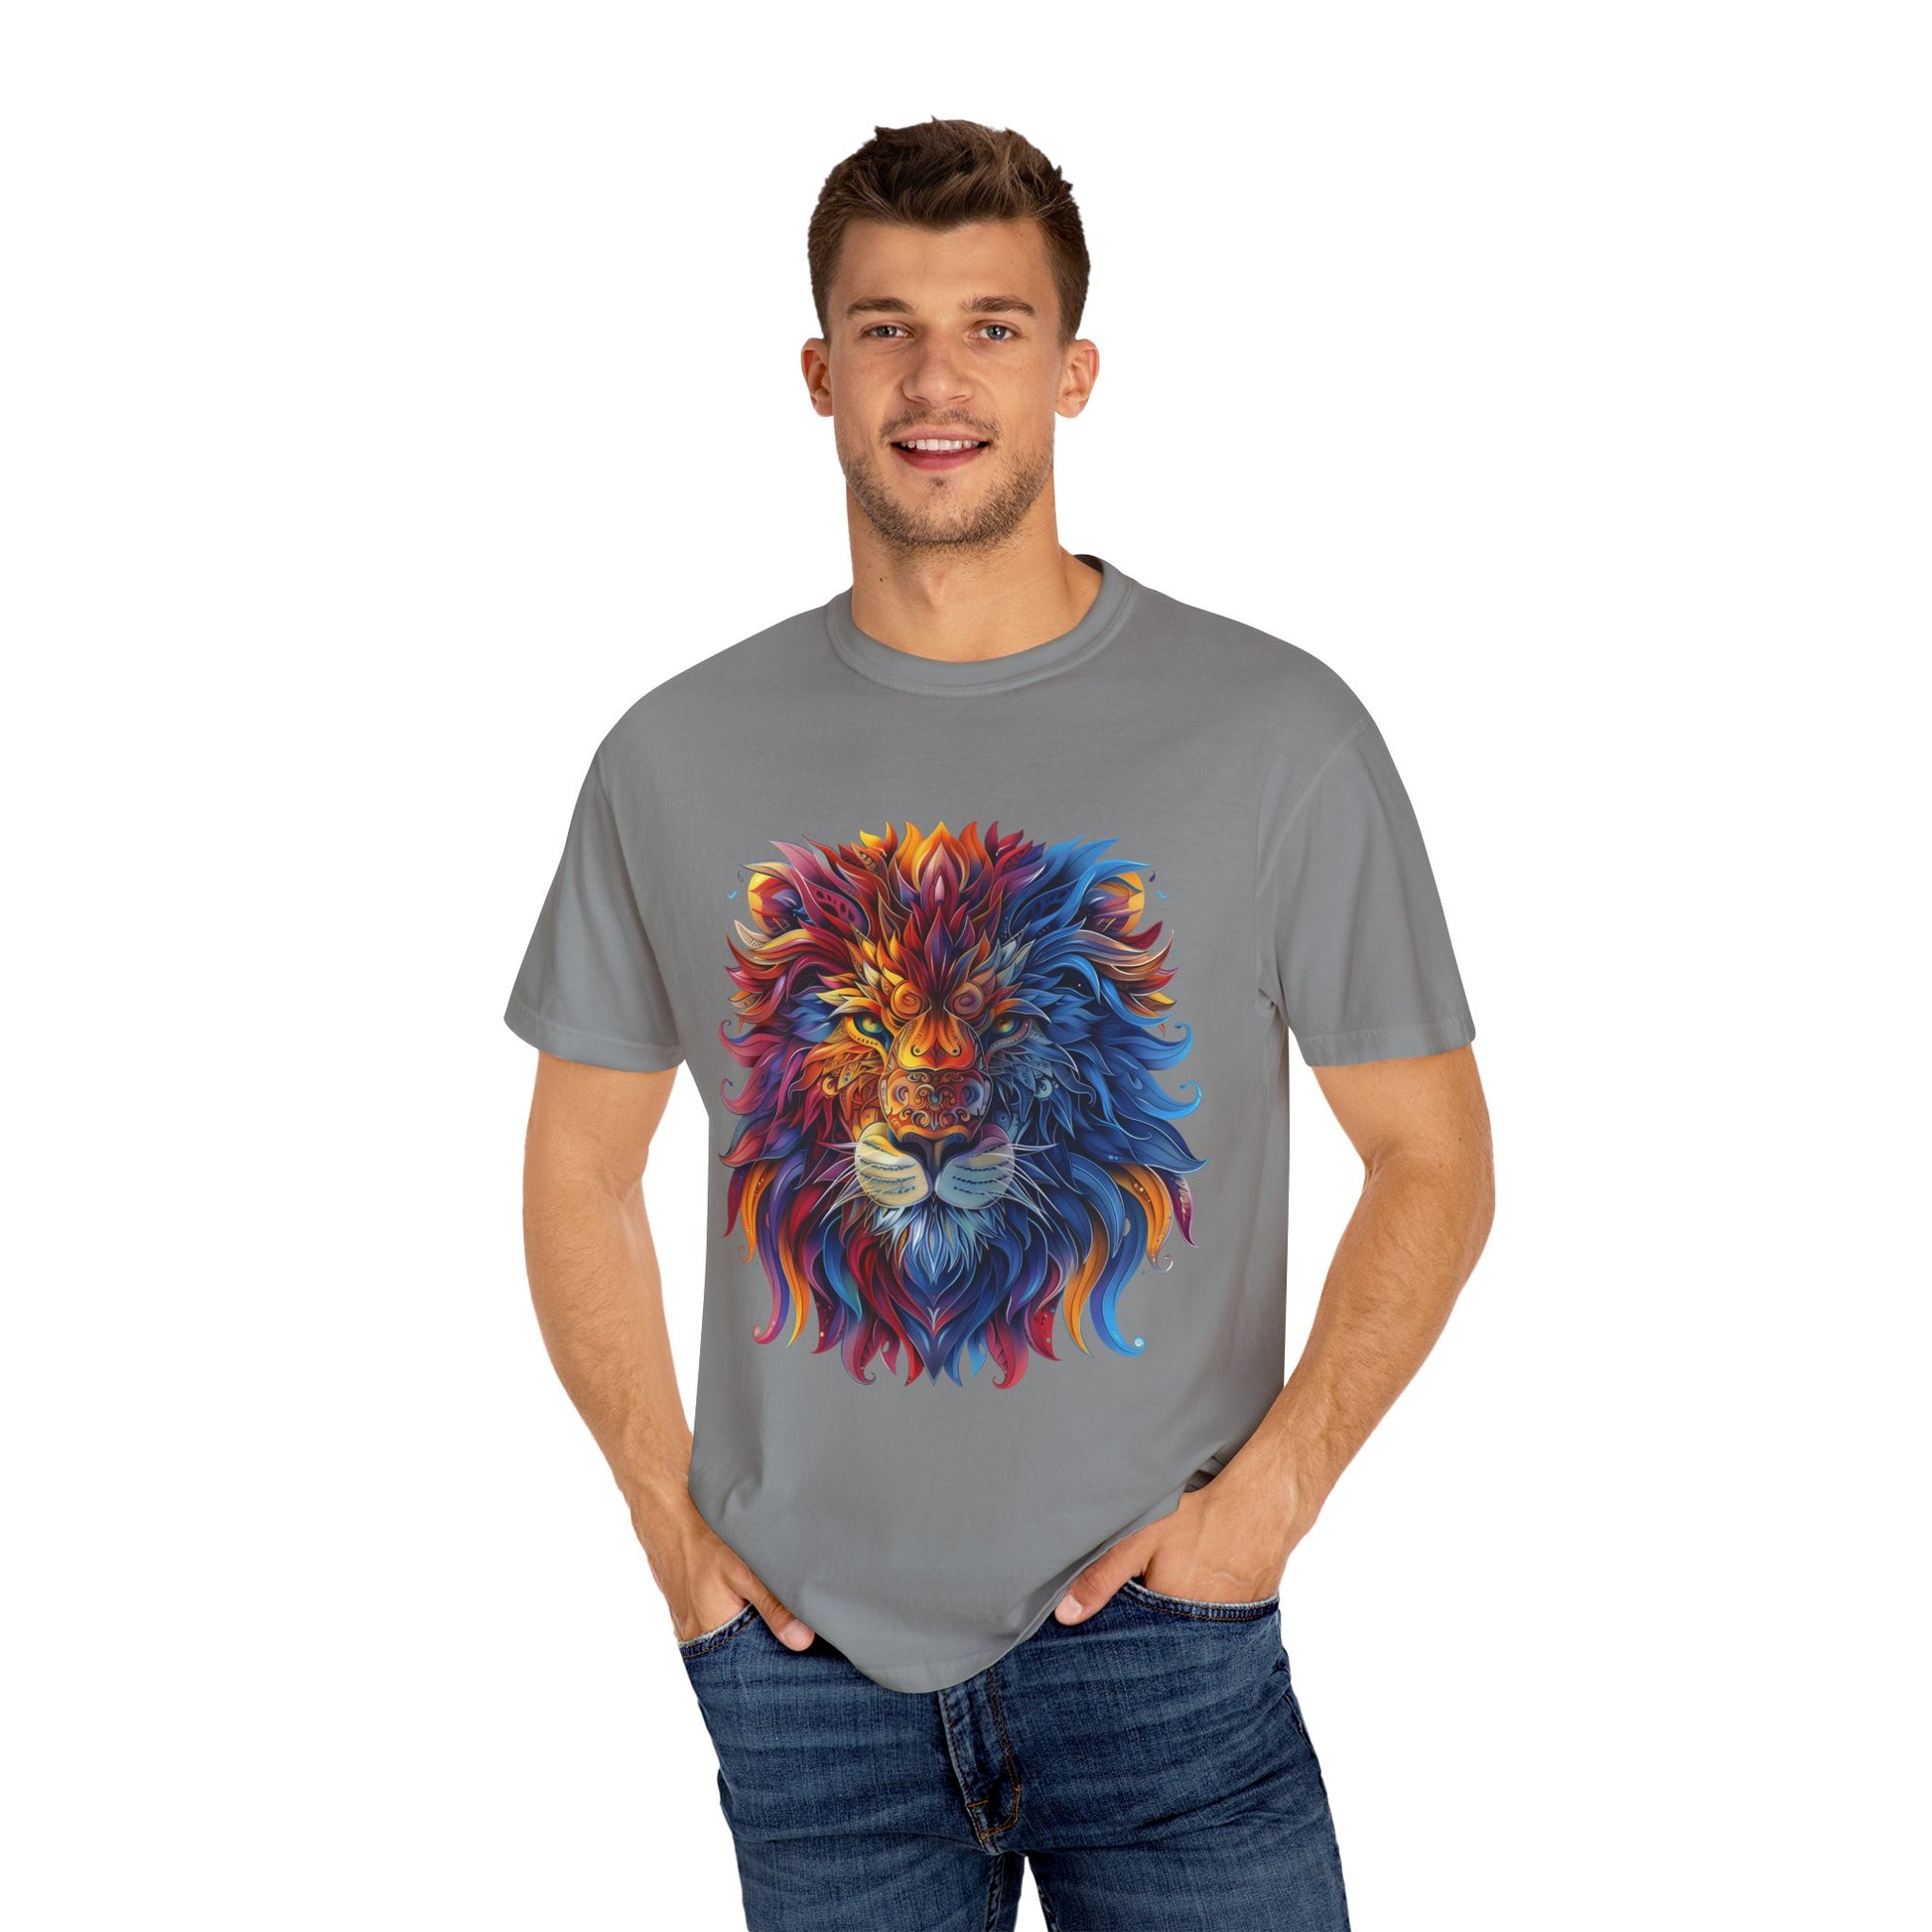 Lion Head Cool Graphic Design Novelty Unisex Garment-dyed T-shirt Cotton Funny Humorous Graphic Soft Premium Unisex Men Women Granite T-shirt Birthday Gift-27